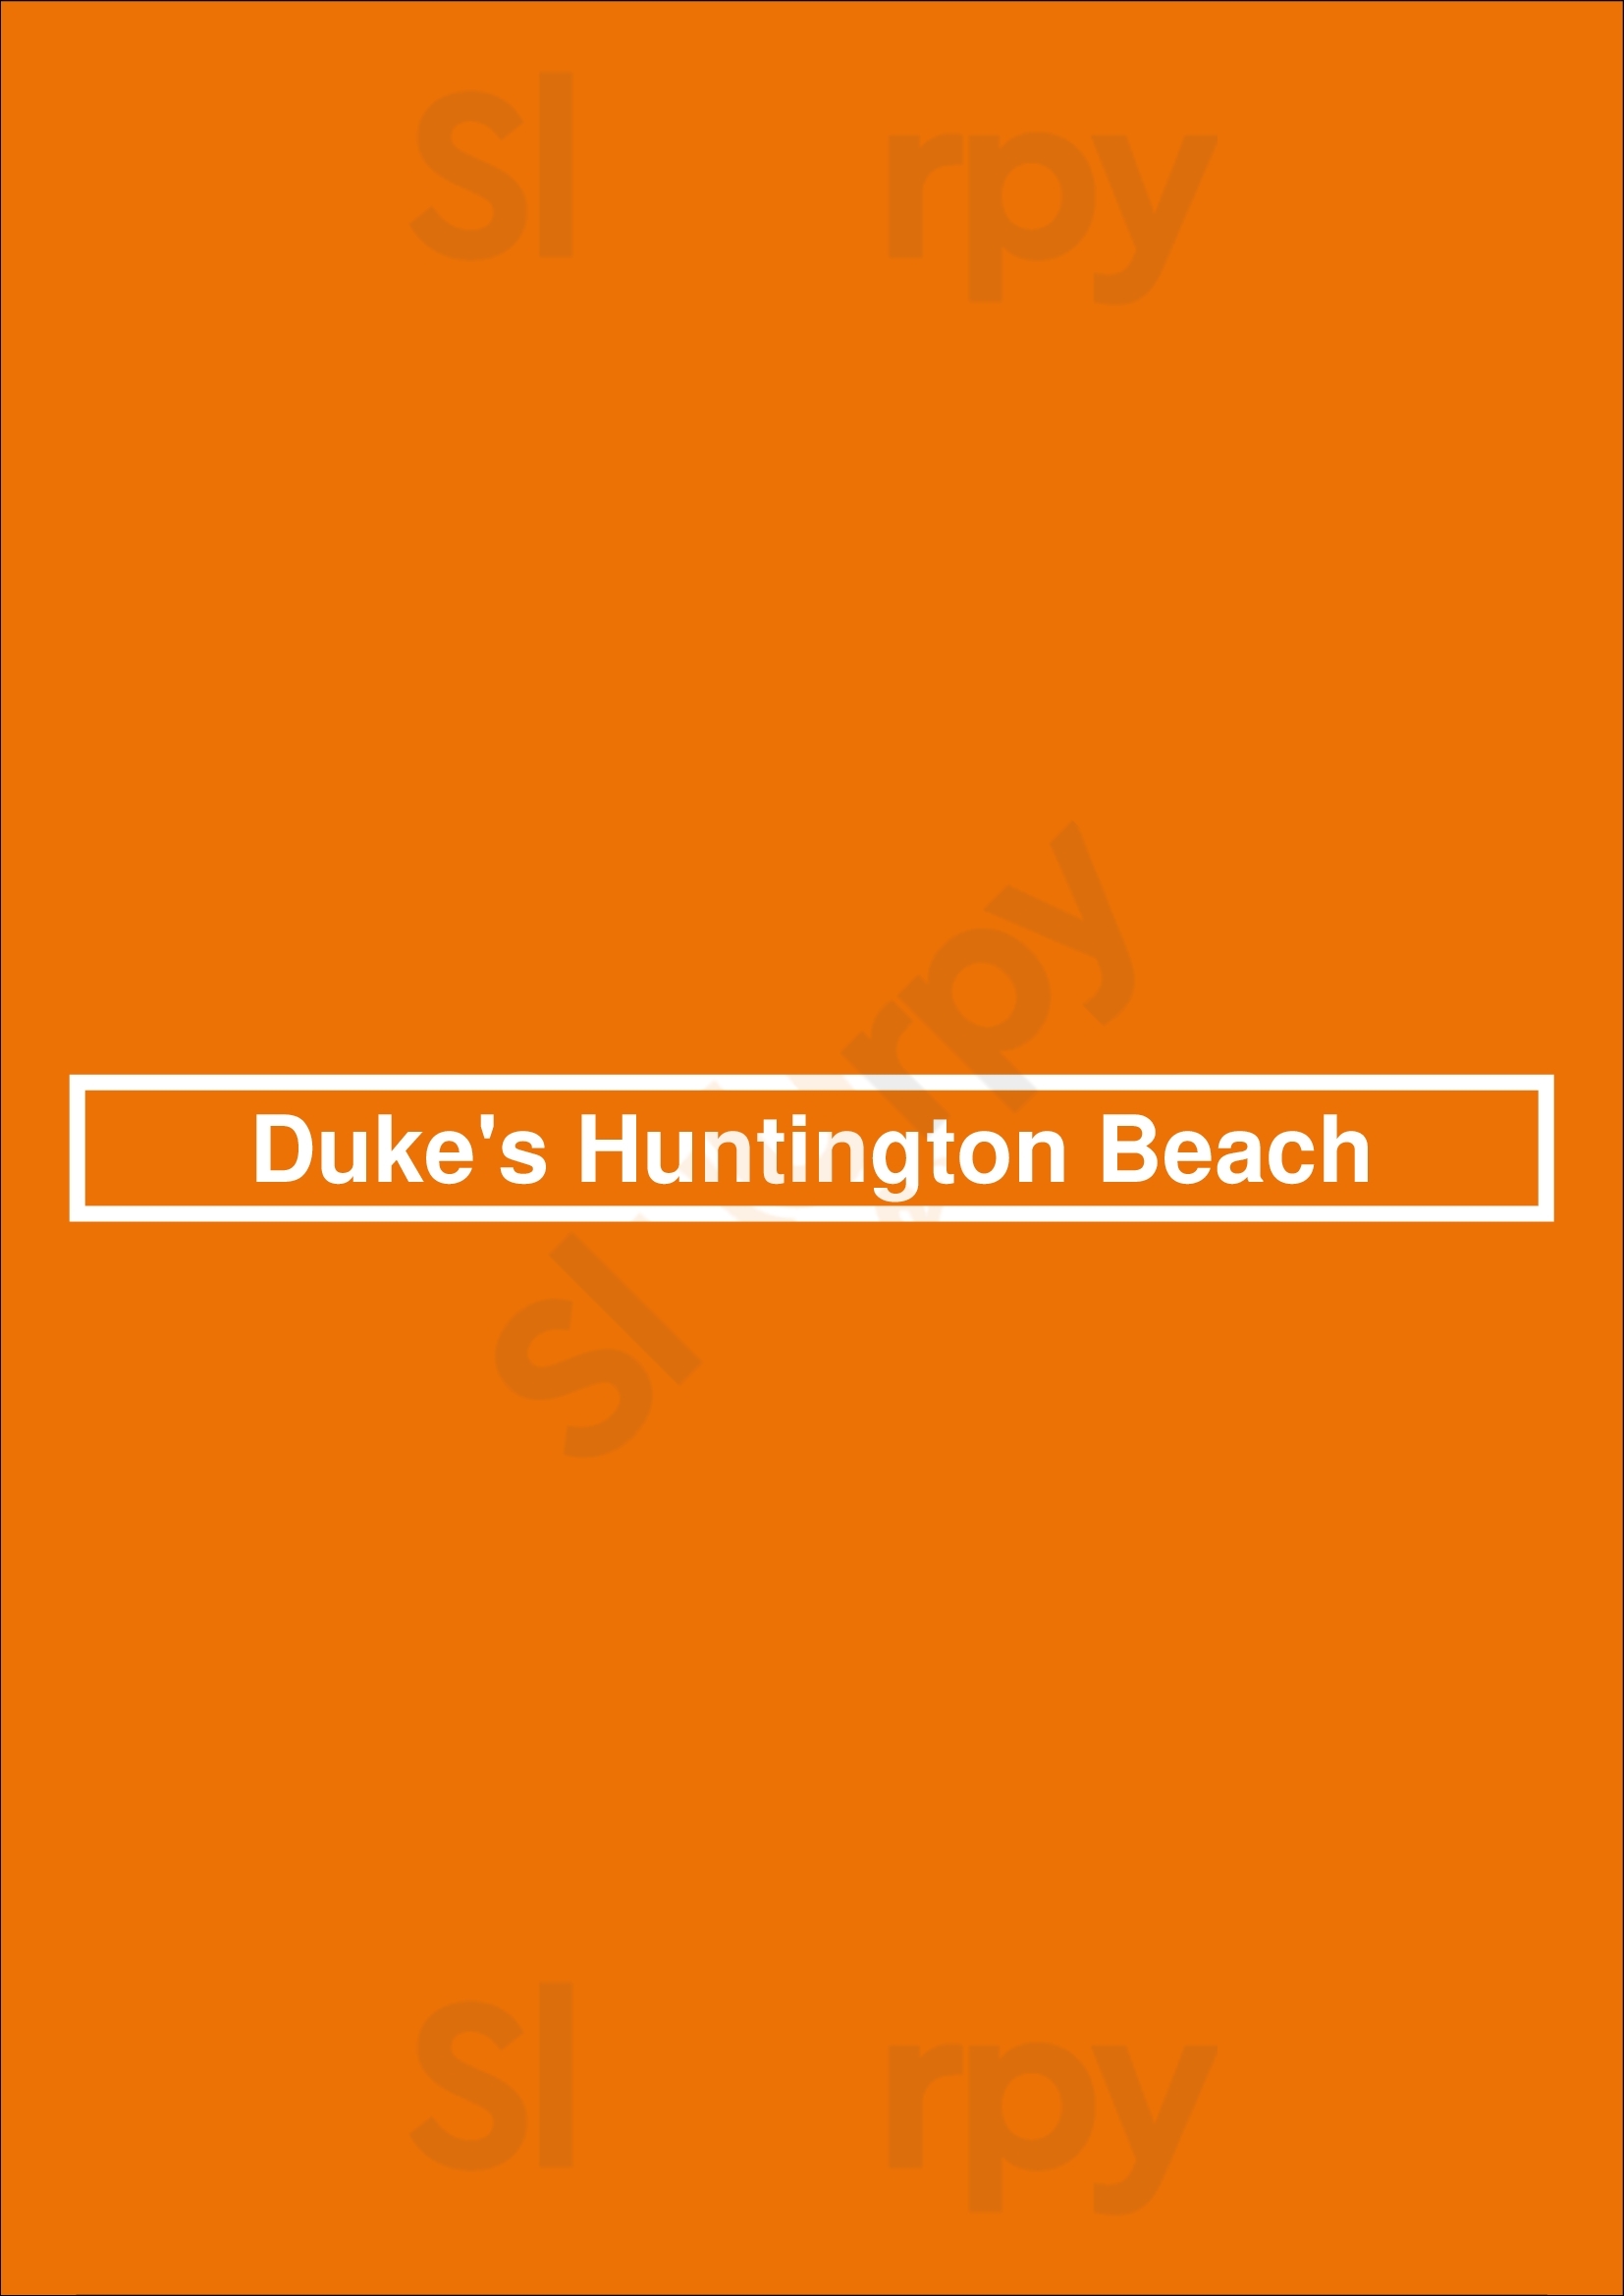 Duke's Huntington Beach Huntington Beach Menu - 1